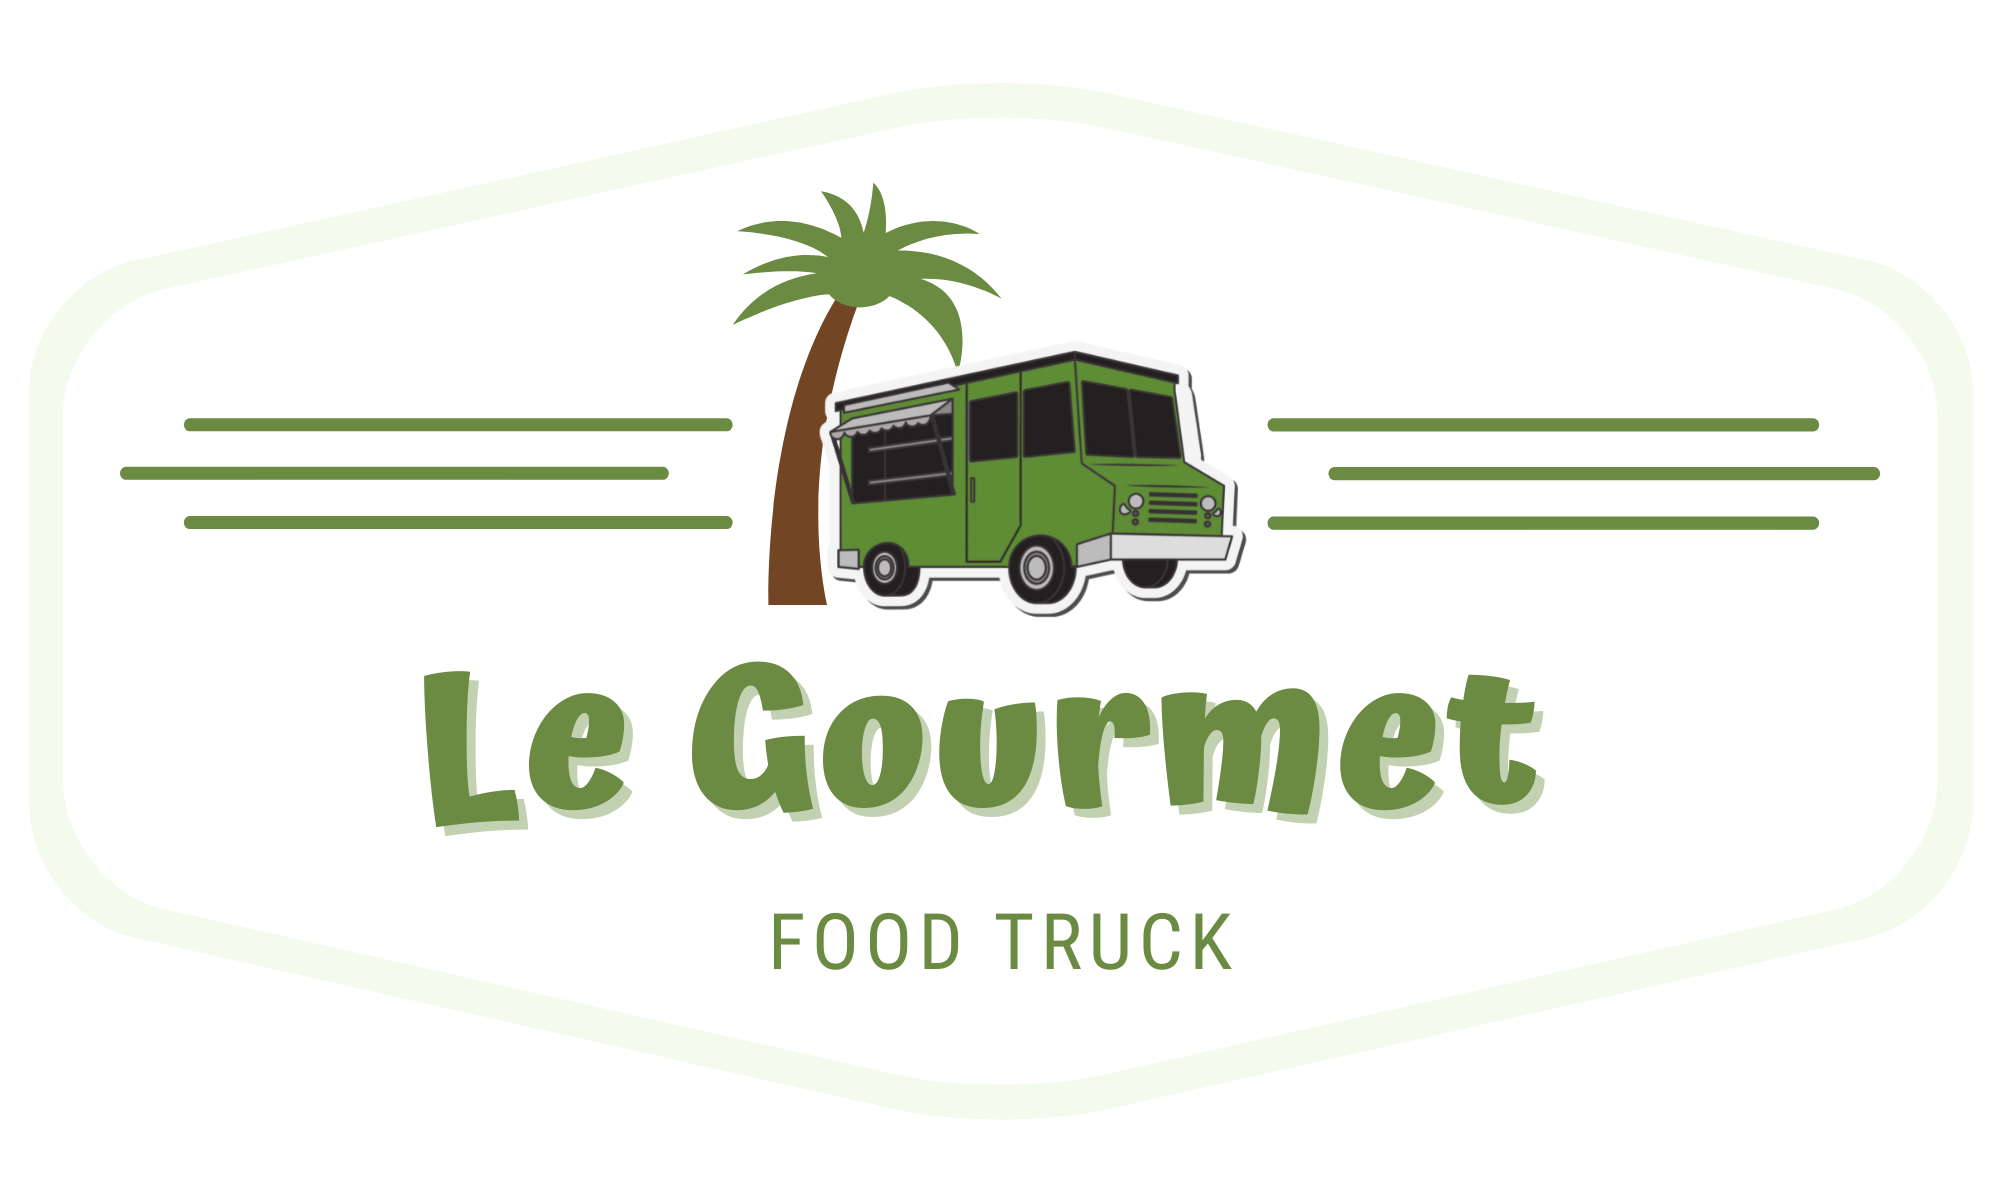 Le Gourmet Food Truck